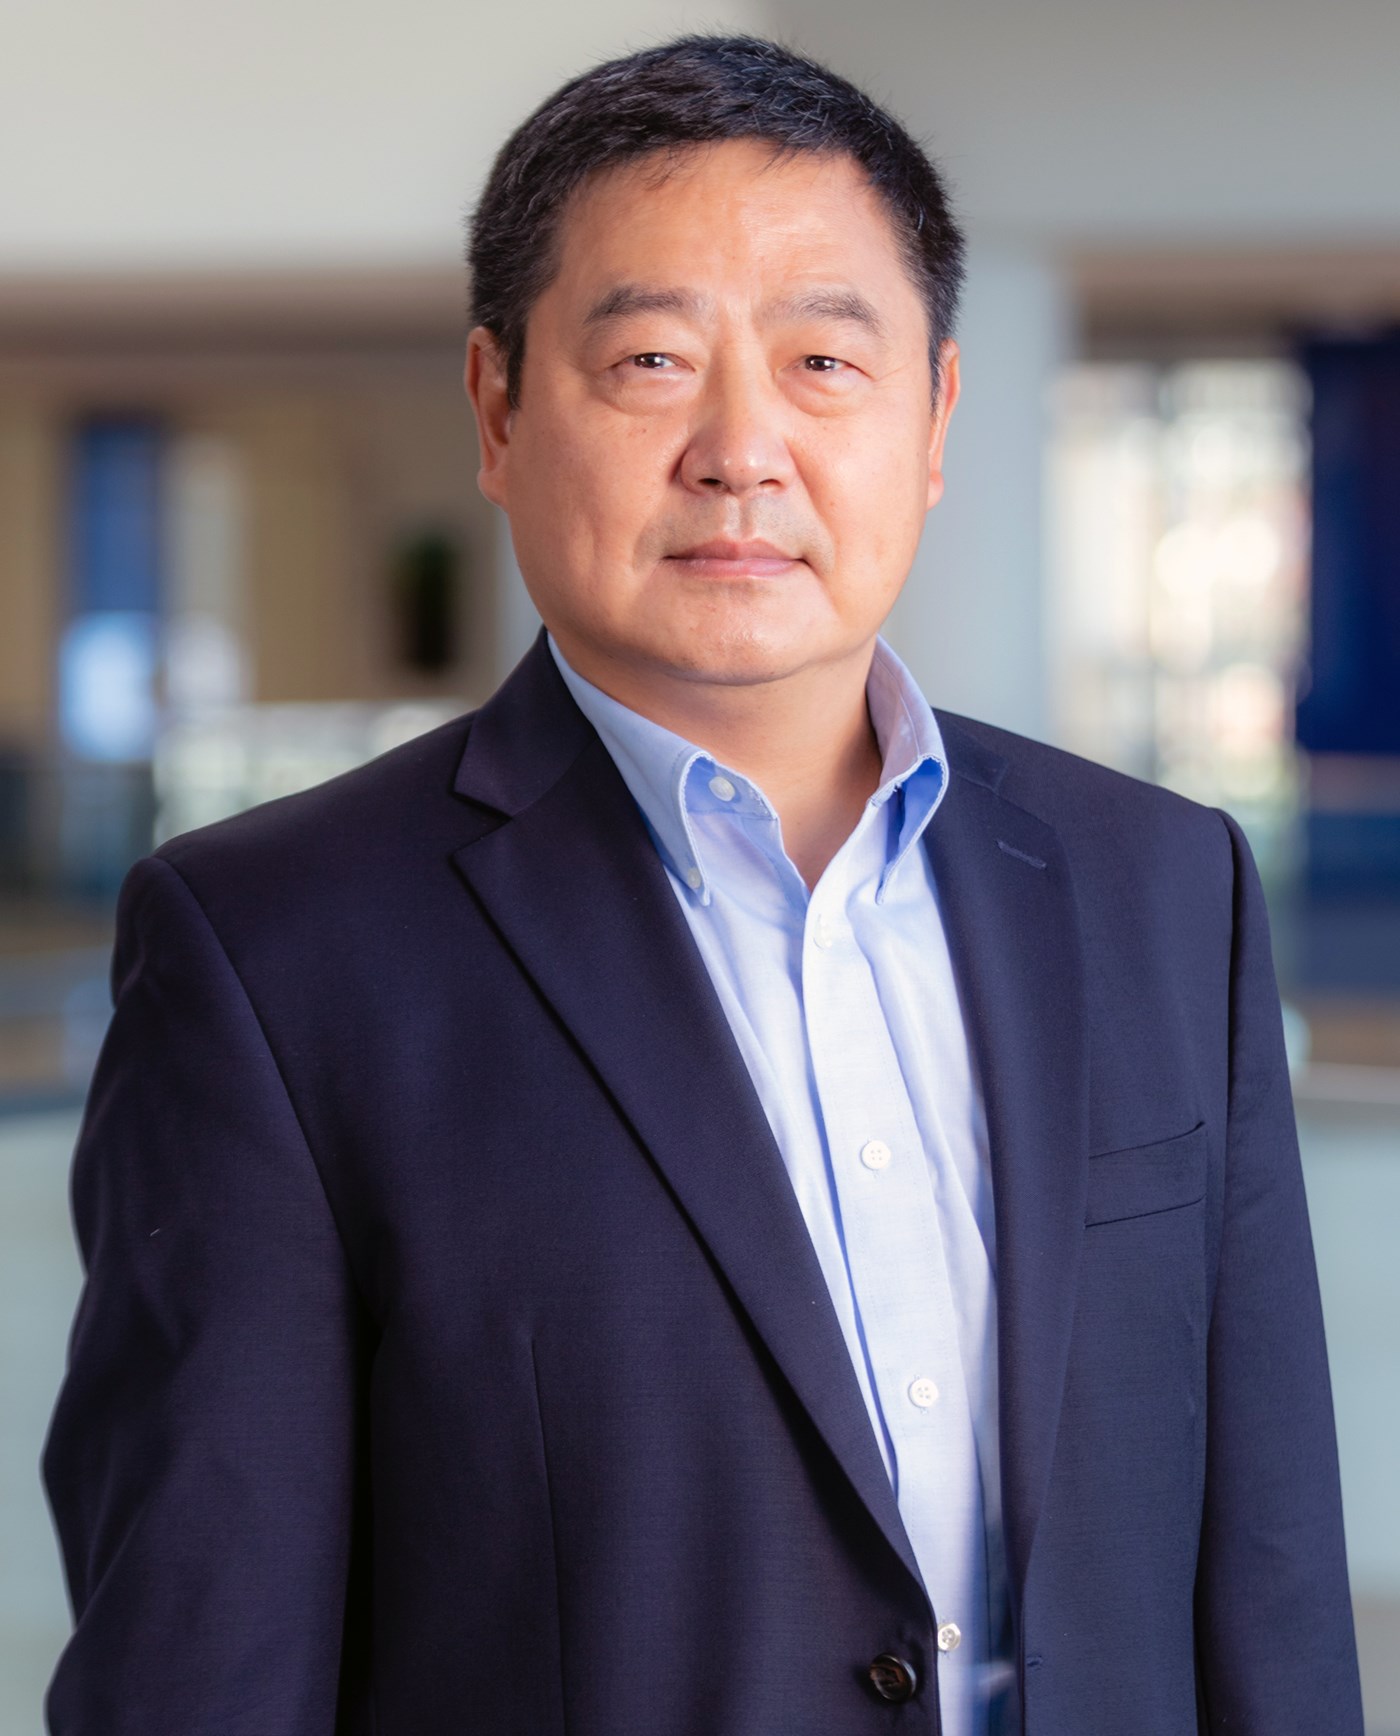 Wenjun Li is a Professor, Director - Health Statistics and Geography Lab at UMass Lowell.